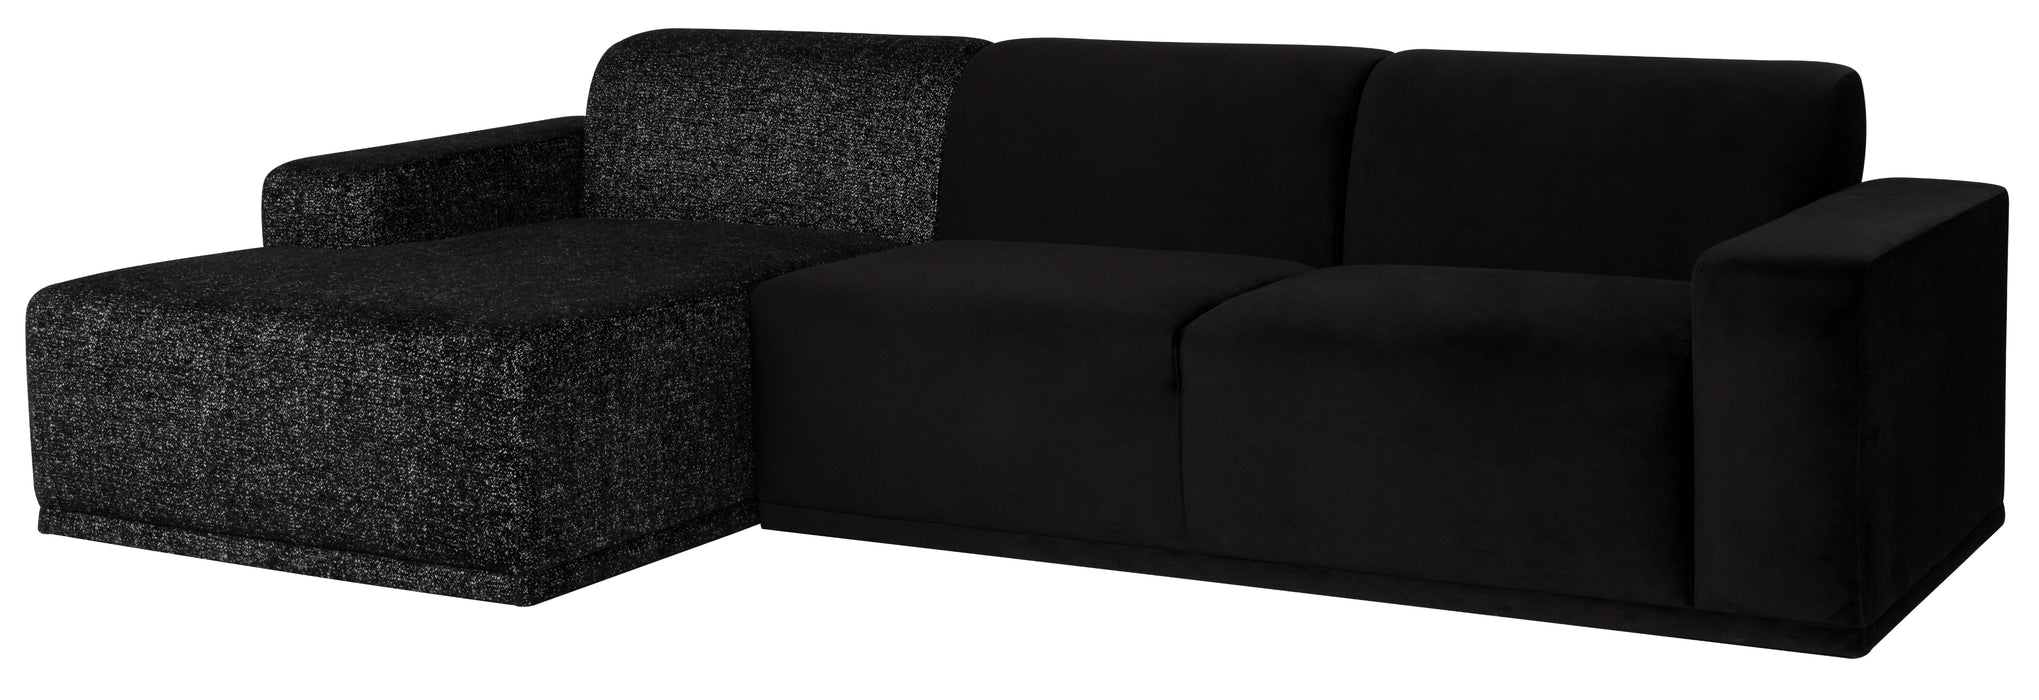 Leo NL Black Sectional Sofa